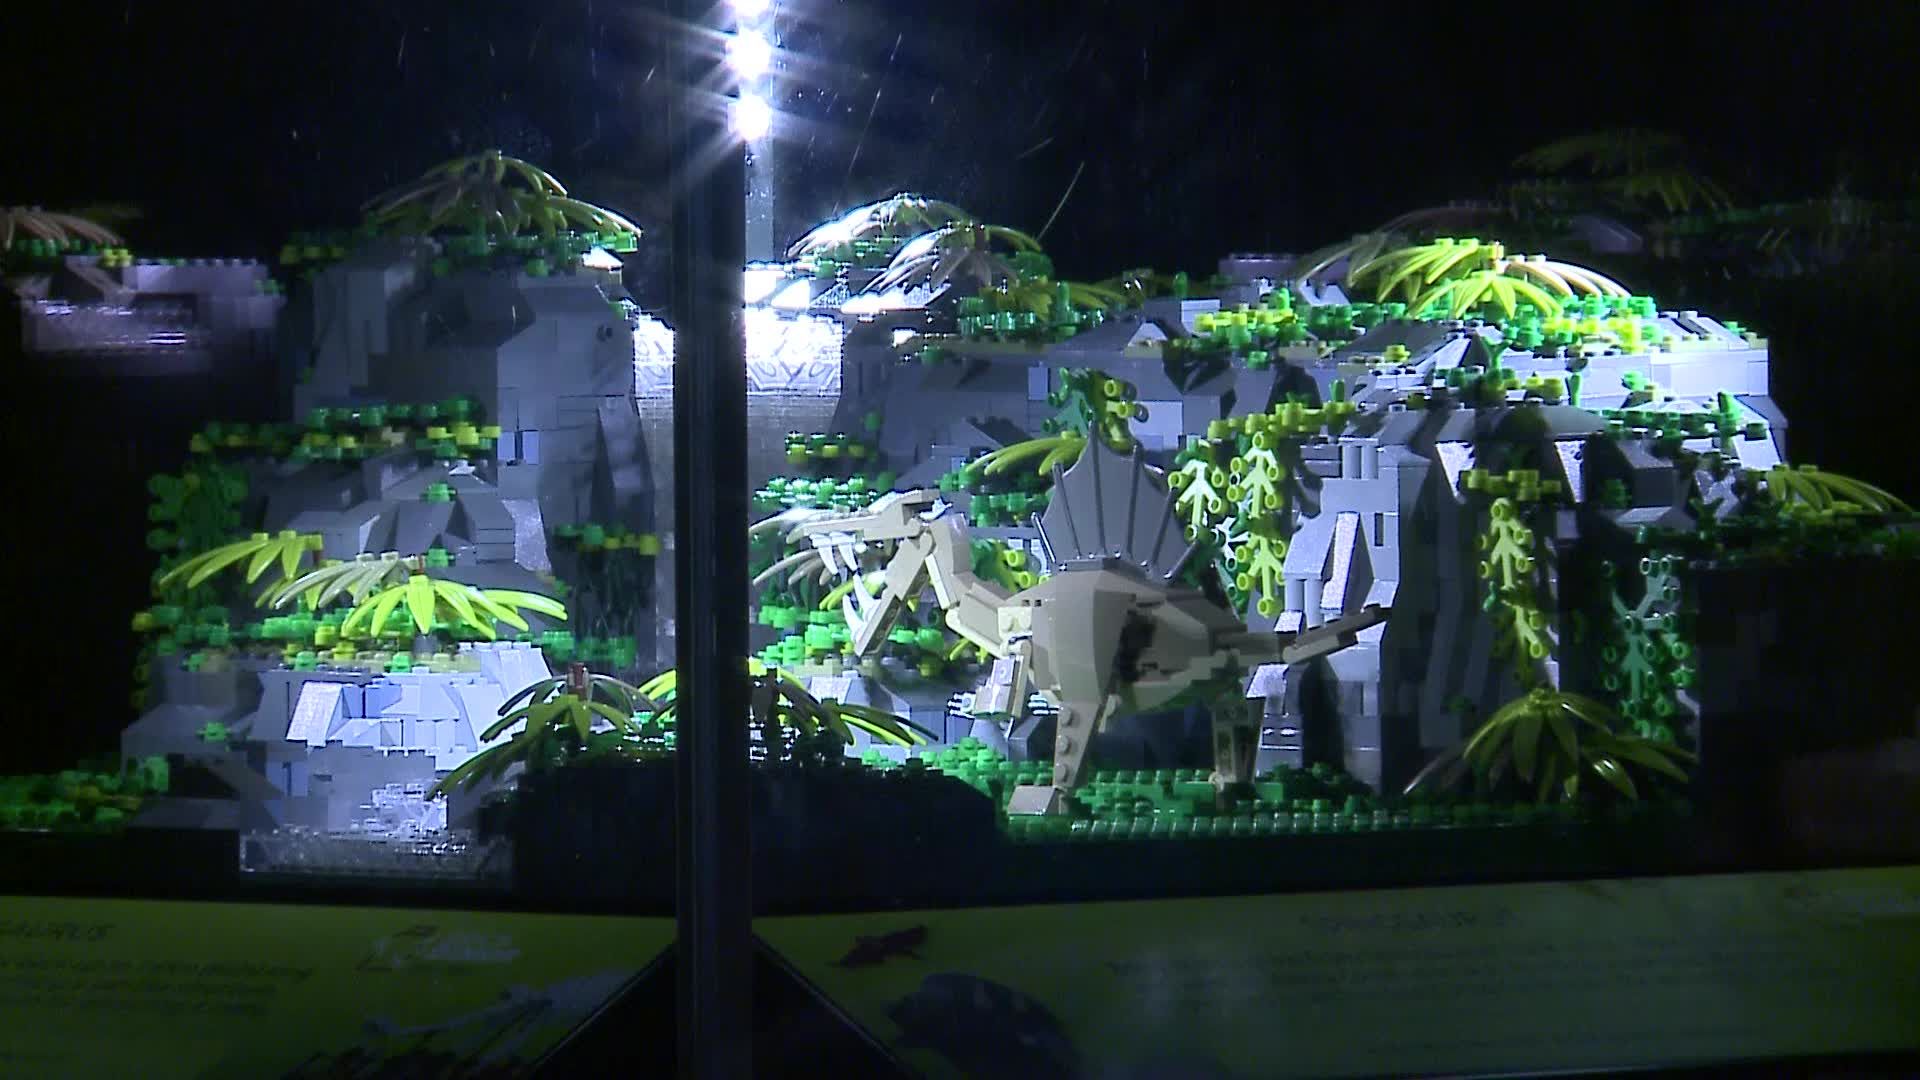 Lego Dinosaur Exhibit At Milwaukee County Zoo - 